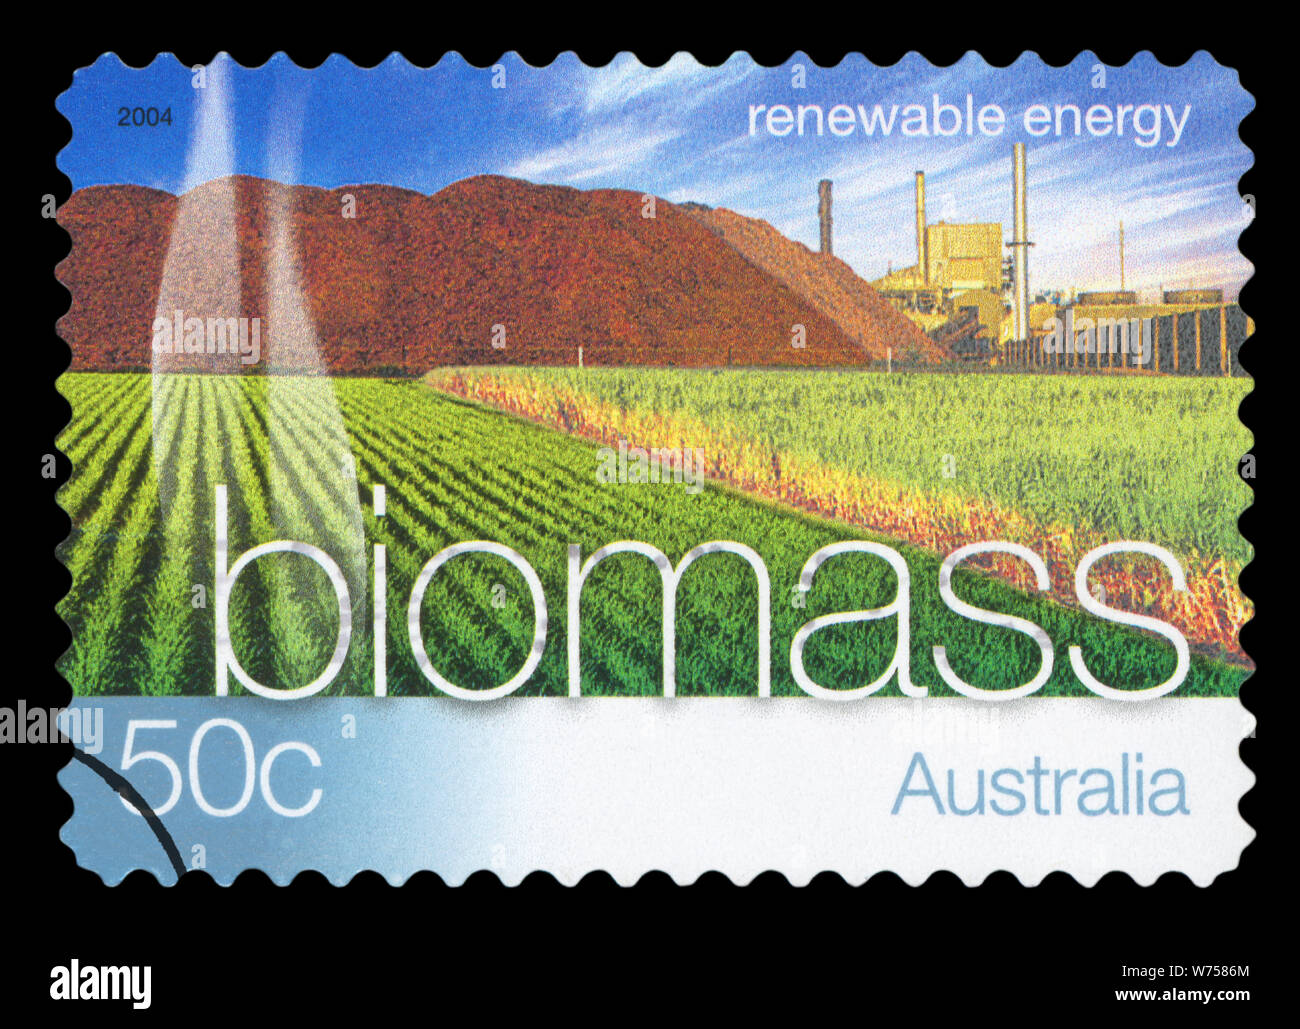 AUSTRALIA - CIRCA 2004: A stamp printed in Australia shows biomass as part of renewable energy, circa 2004 Stock Photo